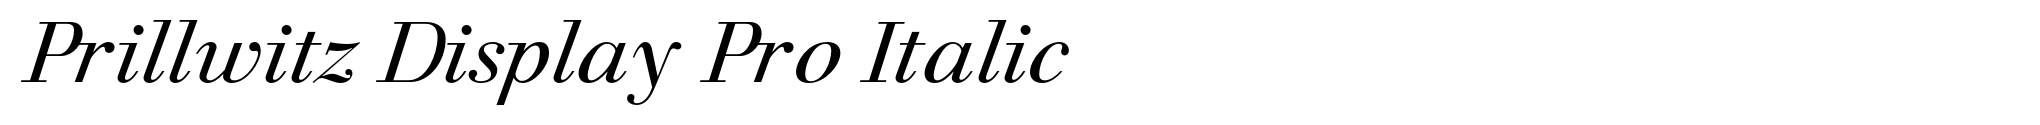 Prillwitz Display Pro Italic image